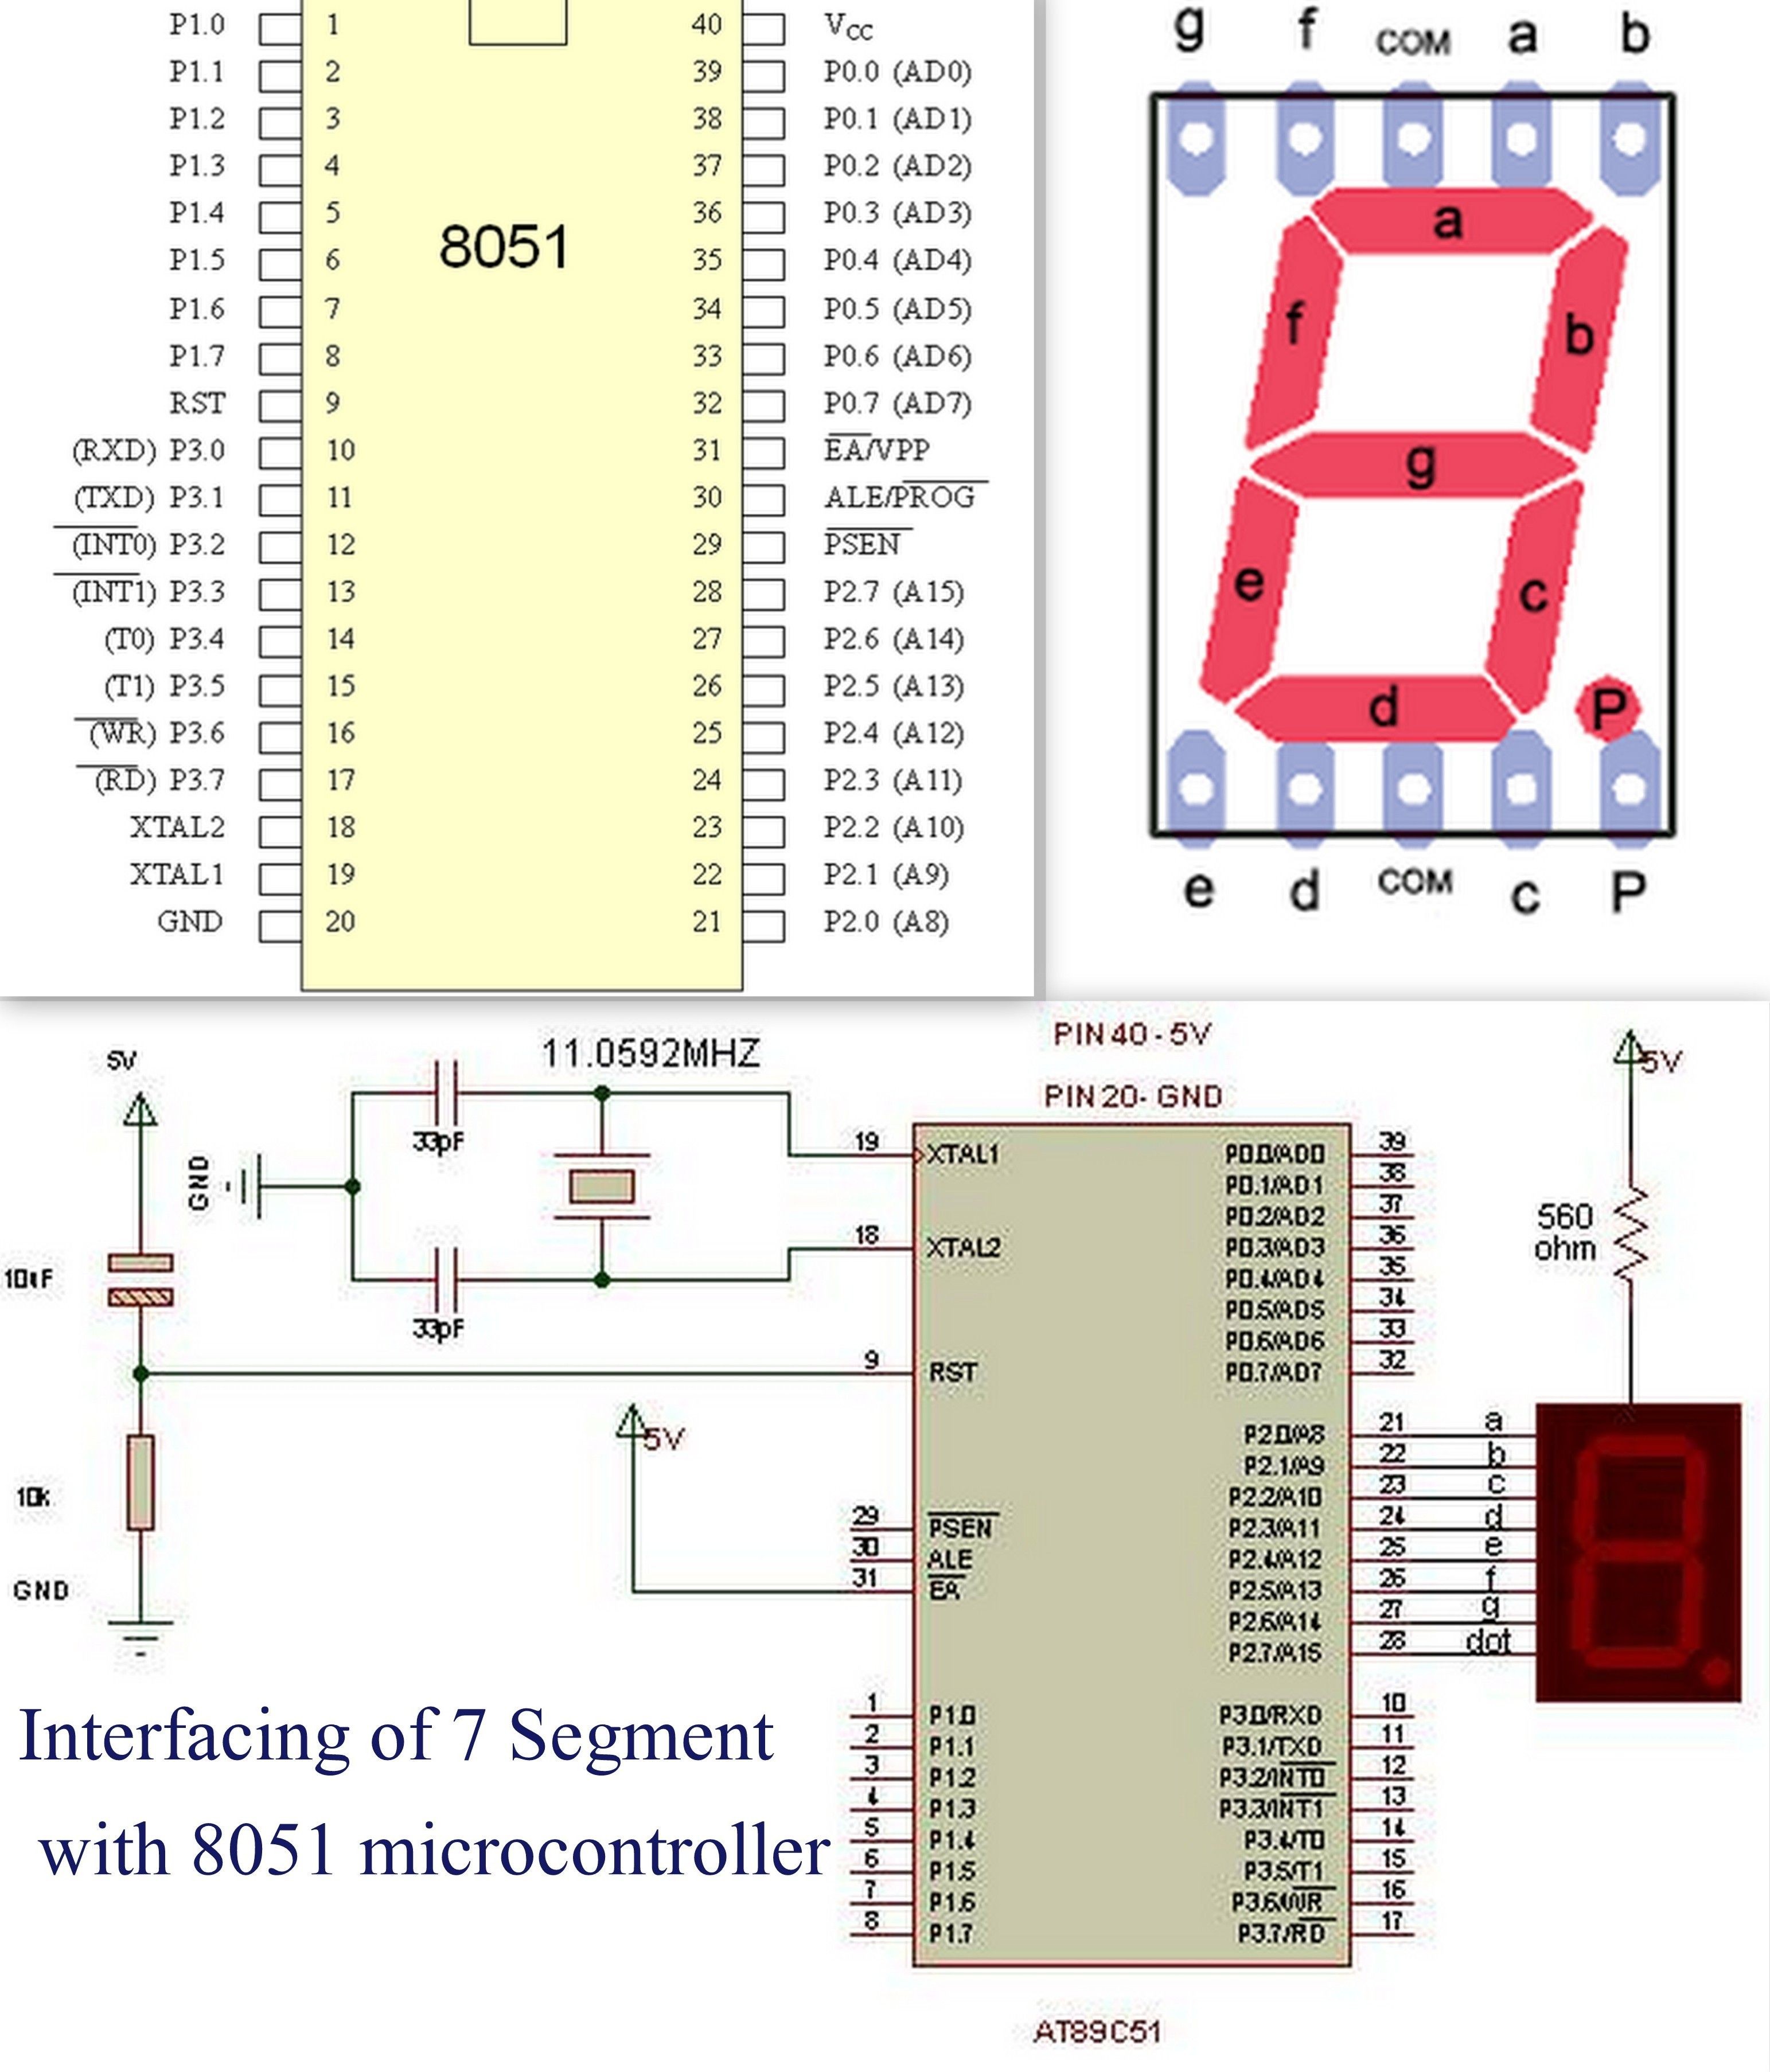 Interfacing of 7 segment display with 8051 microcontroller